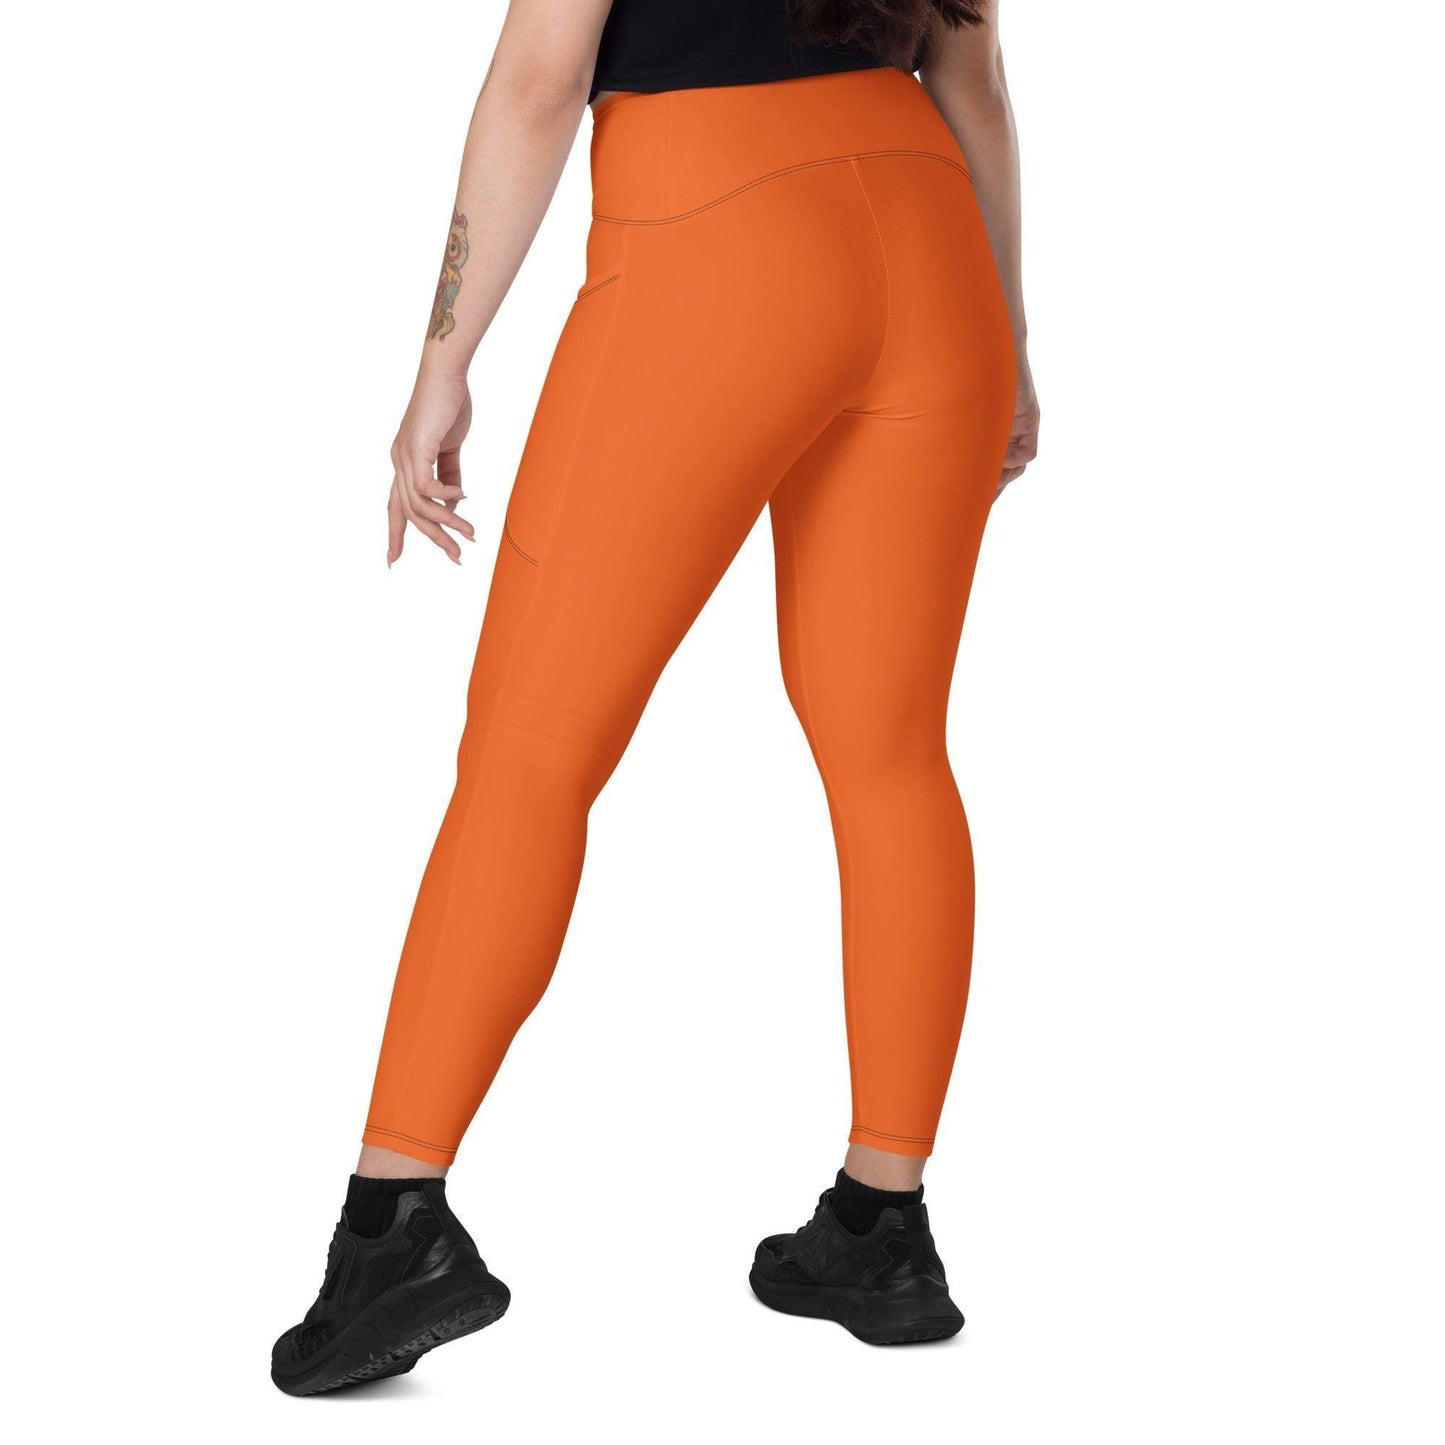 Orange Damen V-Bund Leggings mit Taschen -- Orange Damen V-Bund Leggings mit Taschen - undefined V-Bund Leggings | JLR Design